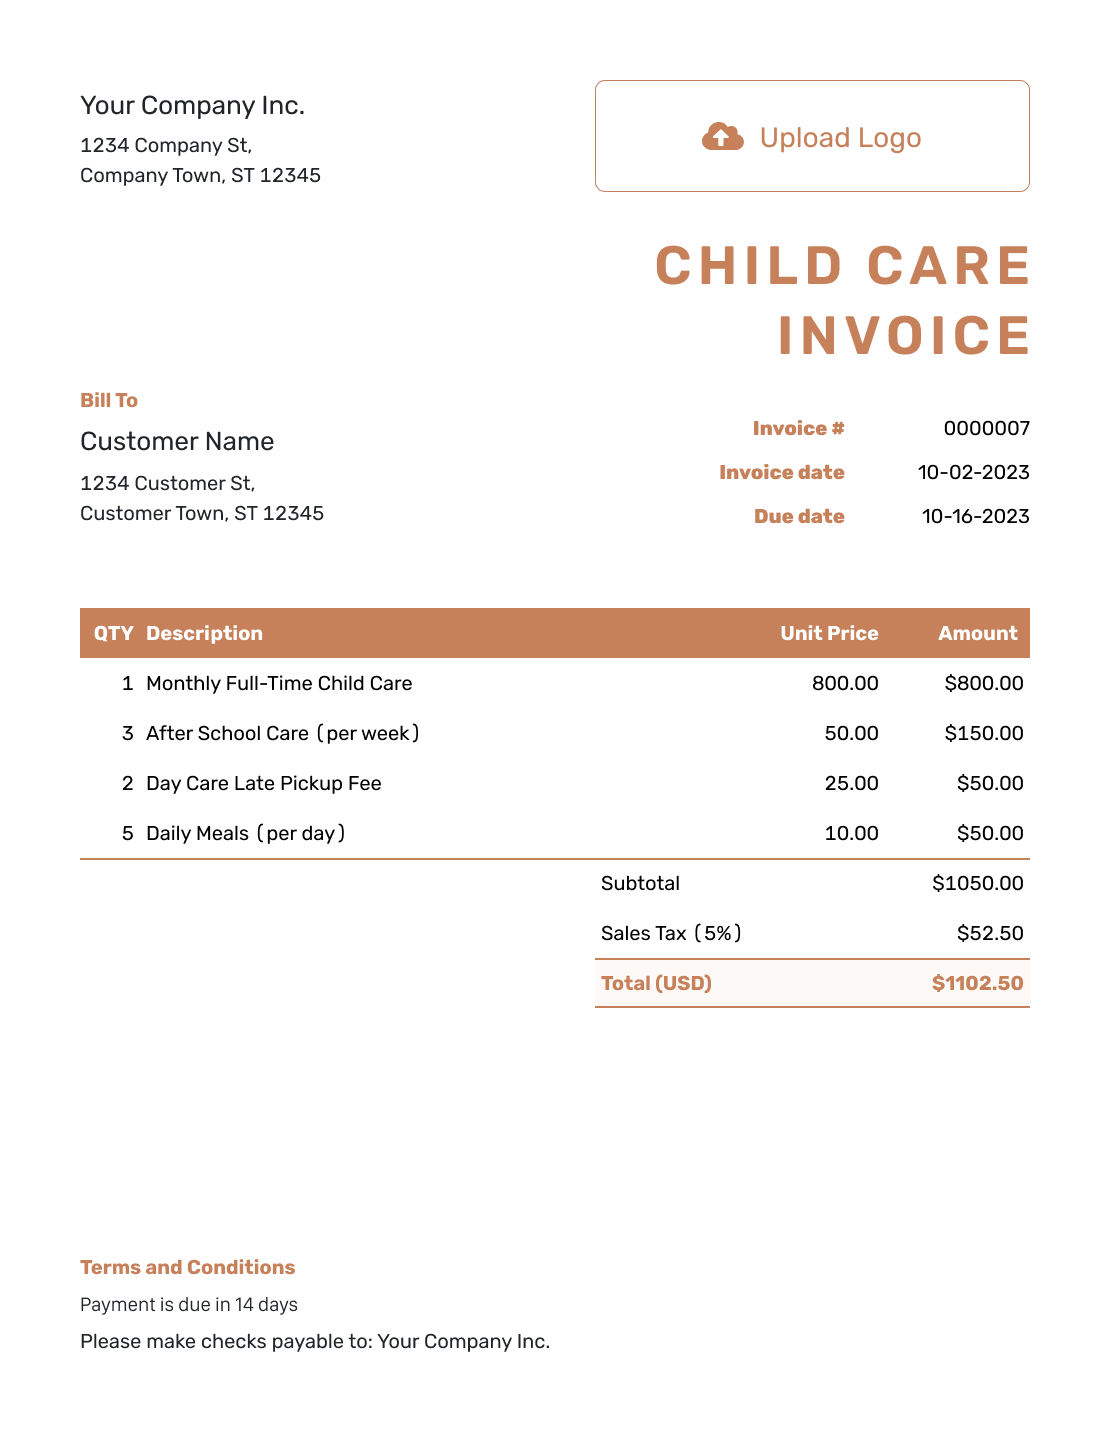 Standard Child Care Invoice Template